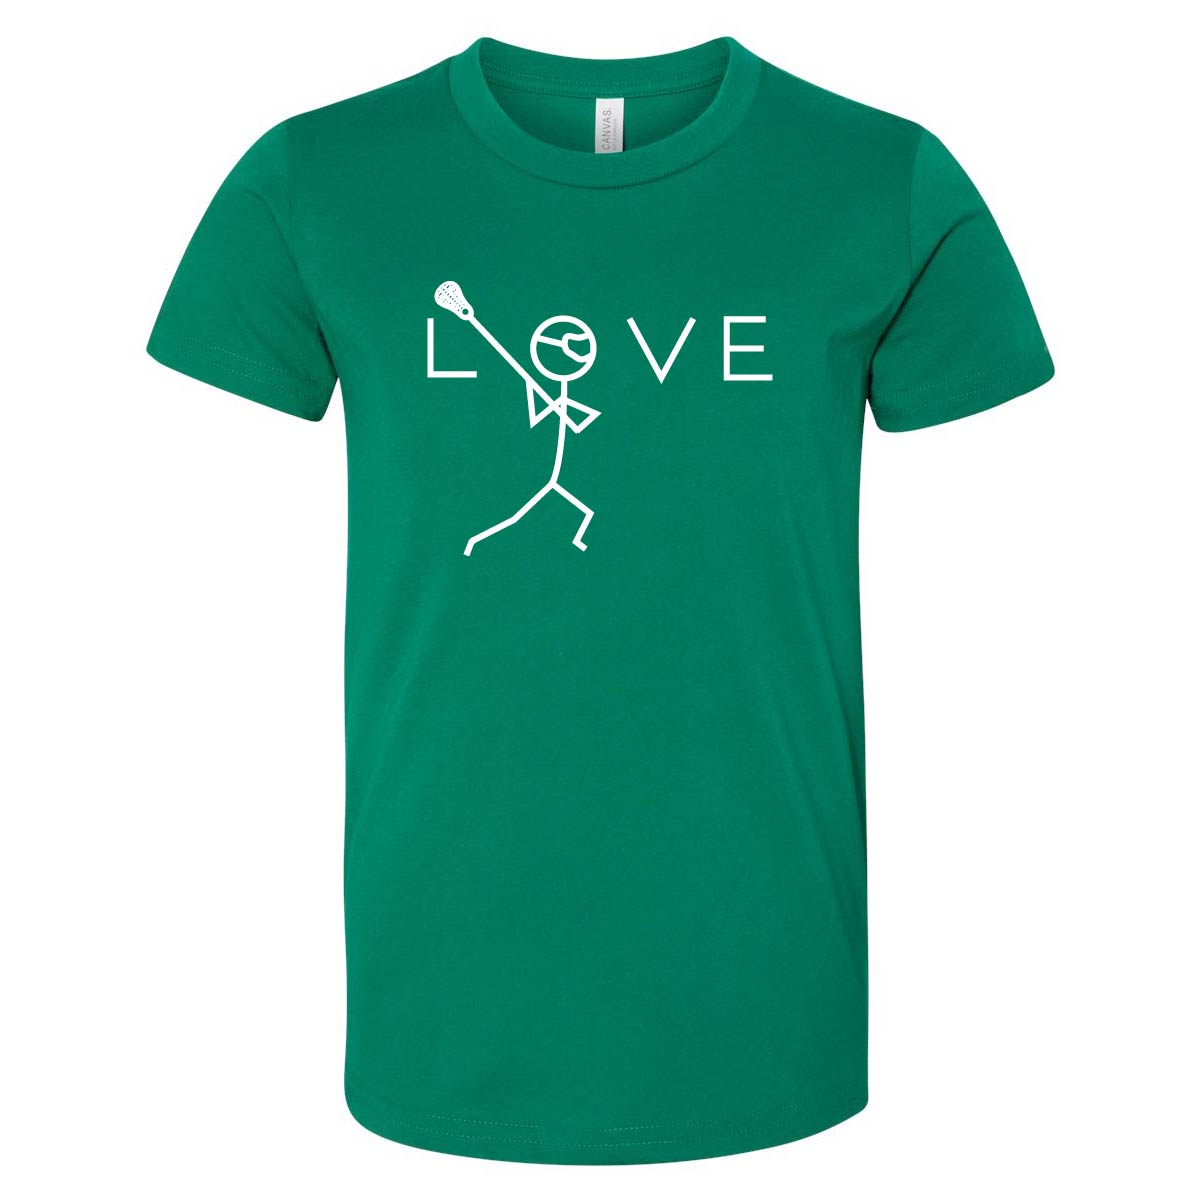 Lacrosse (Girls) Youth T-shirt